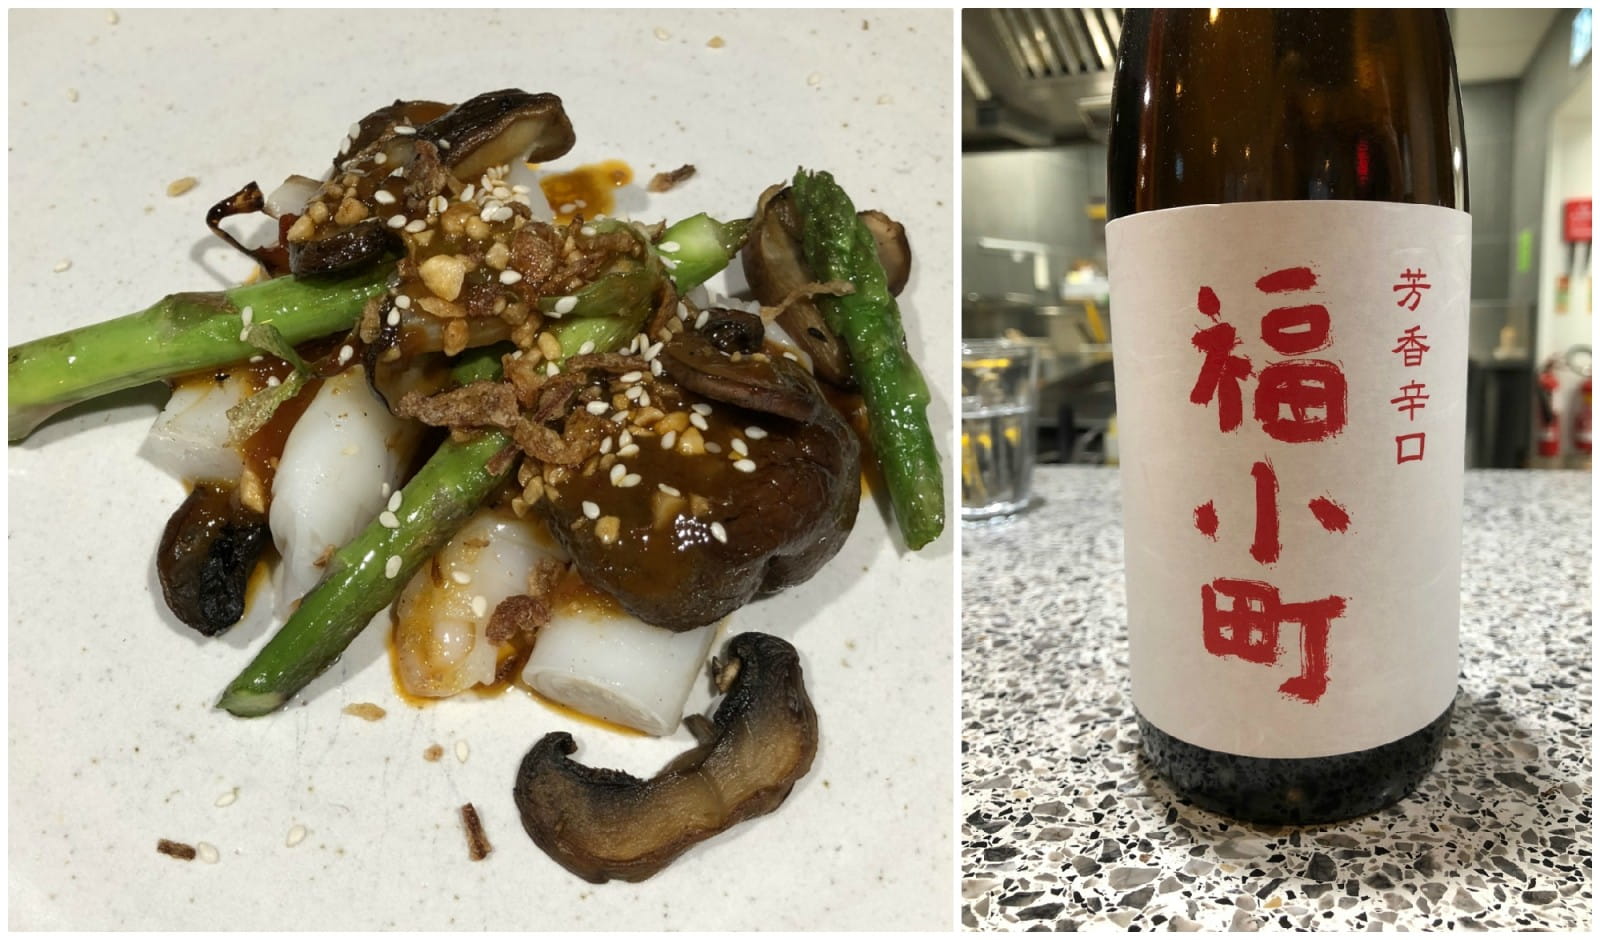 Junmai sake with cheung fun, asparagus and shiitake mushrooms